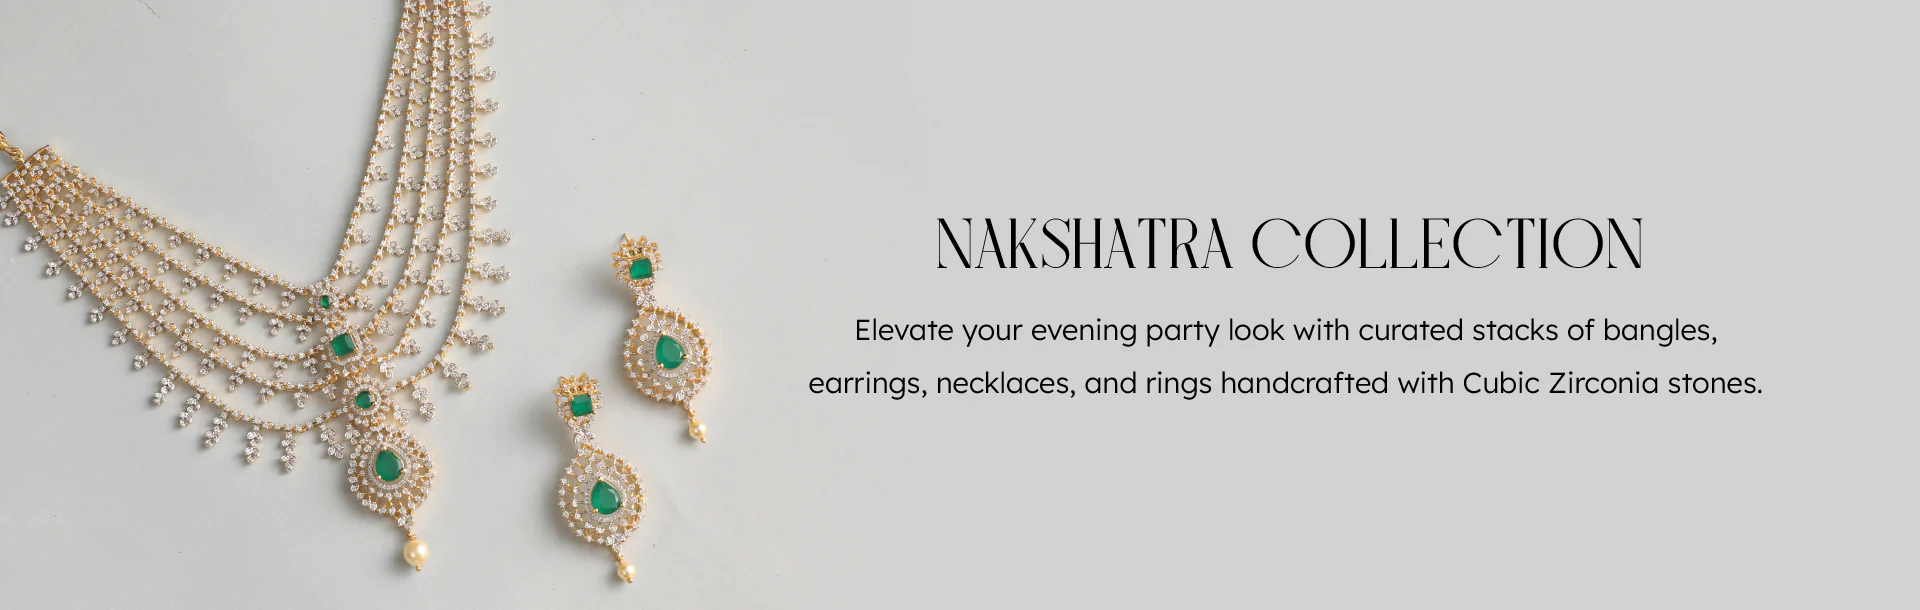 Nakshatra Collection